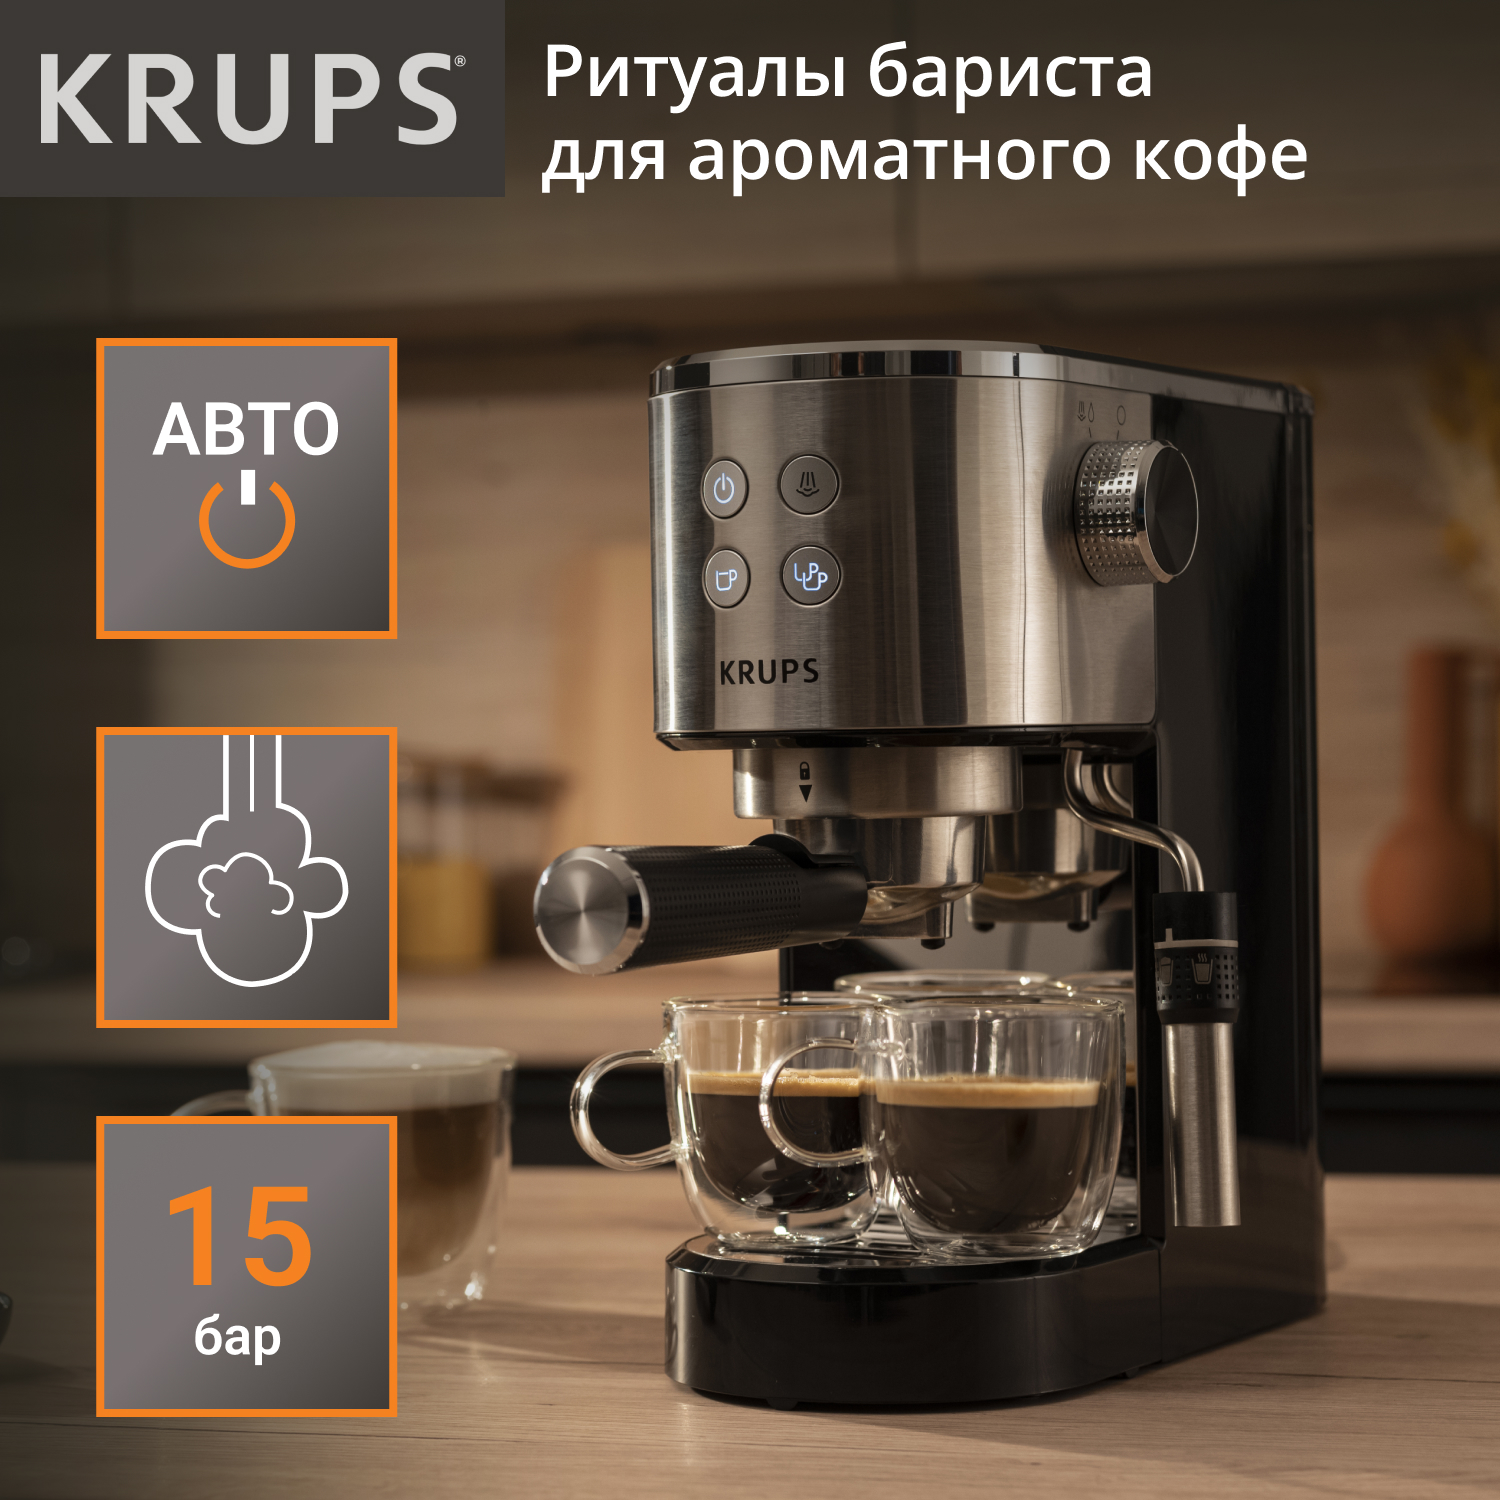 Рожковая кофеварка KRUPS XP444C10 серебристая, черная рожковая кофеварка xp444c10 с кофемолкой krups fast touch gx204d10